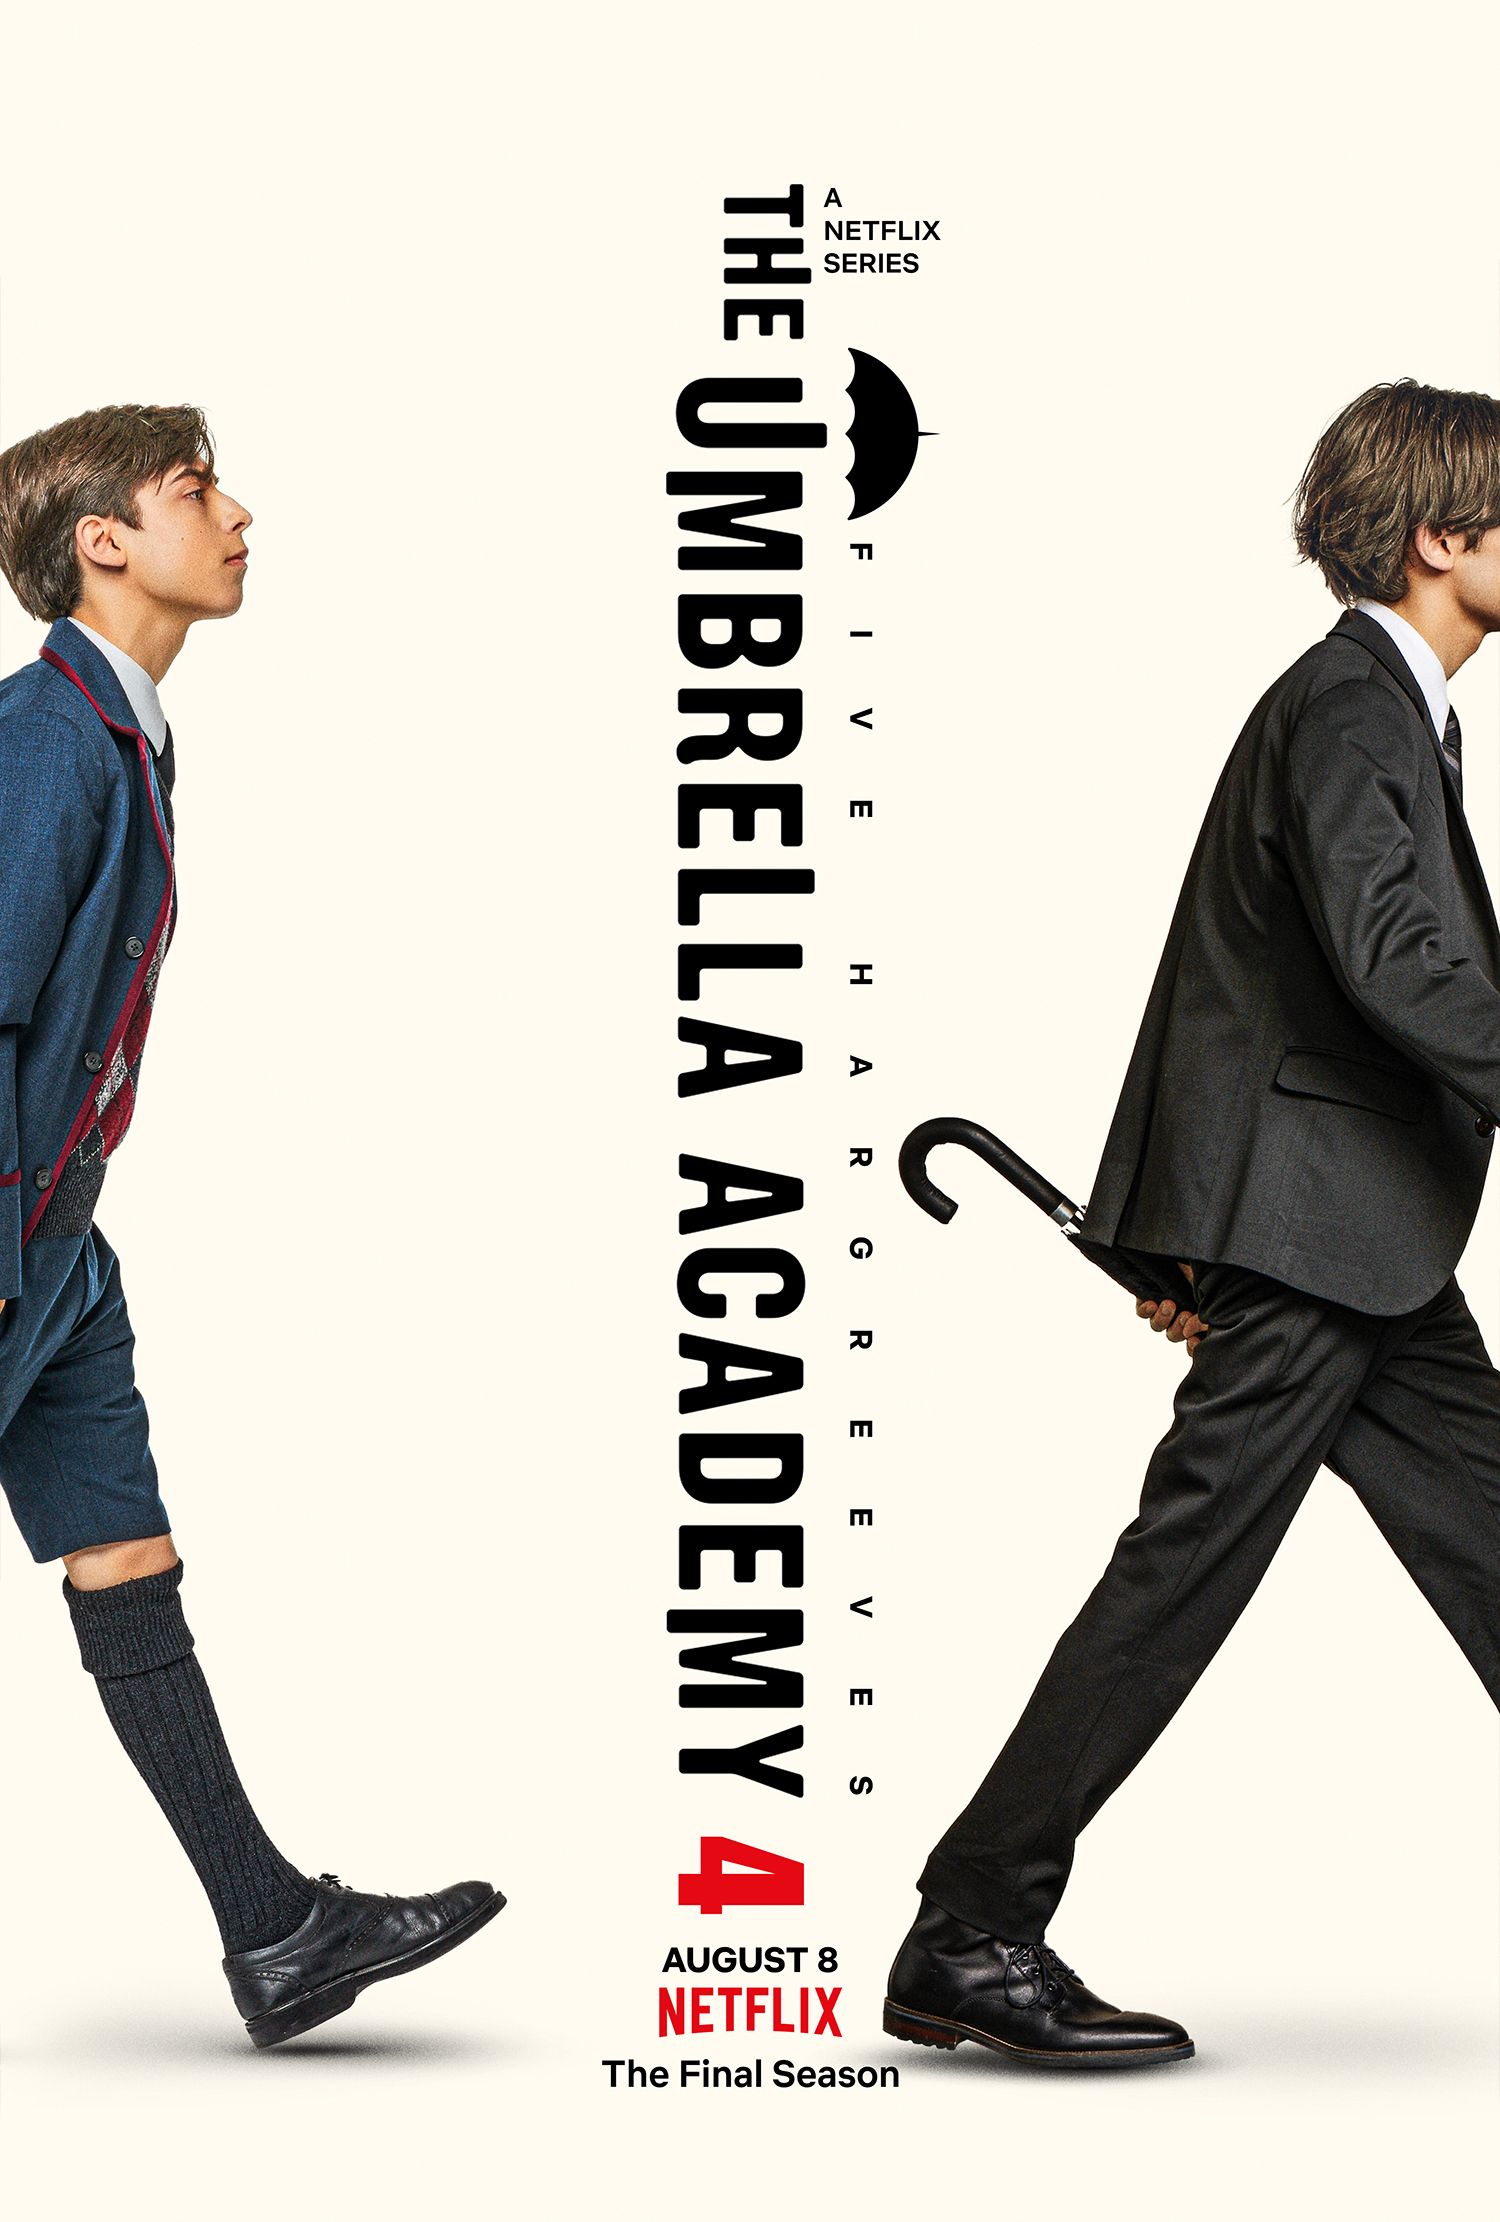 The Umbrella Academy Season 4 Poster Showing Five Walking